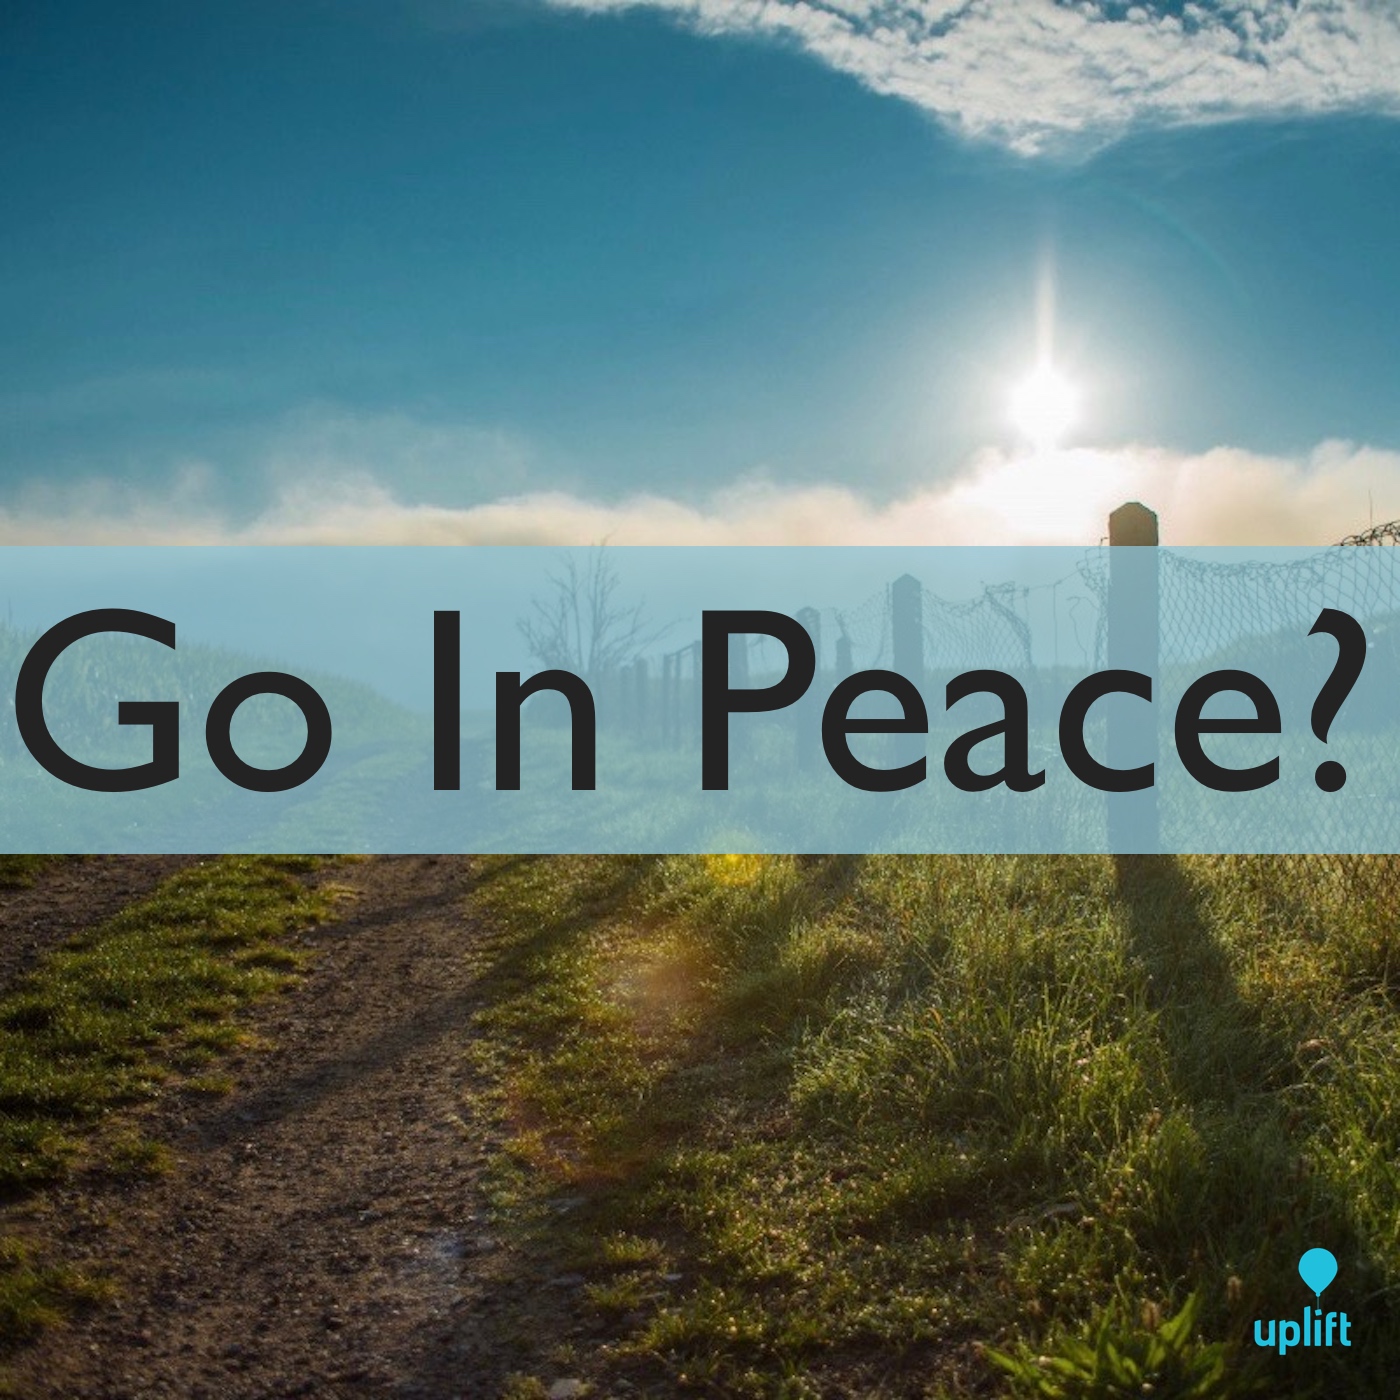 Episode 51: Go In Peace?